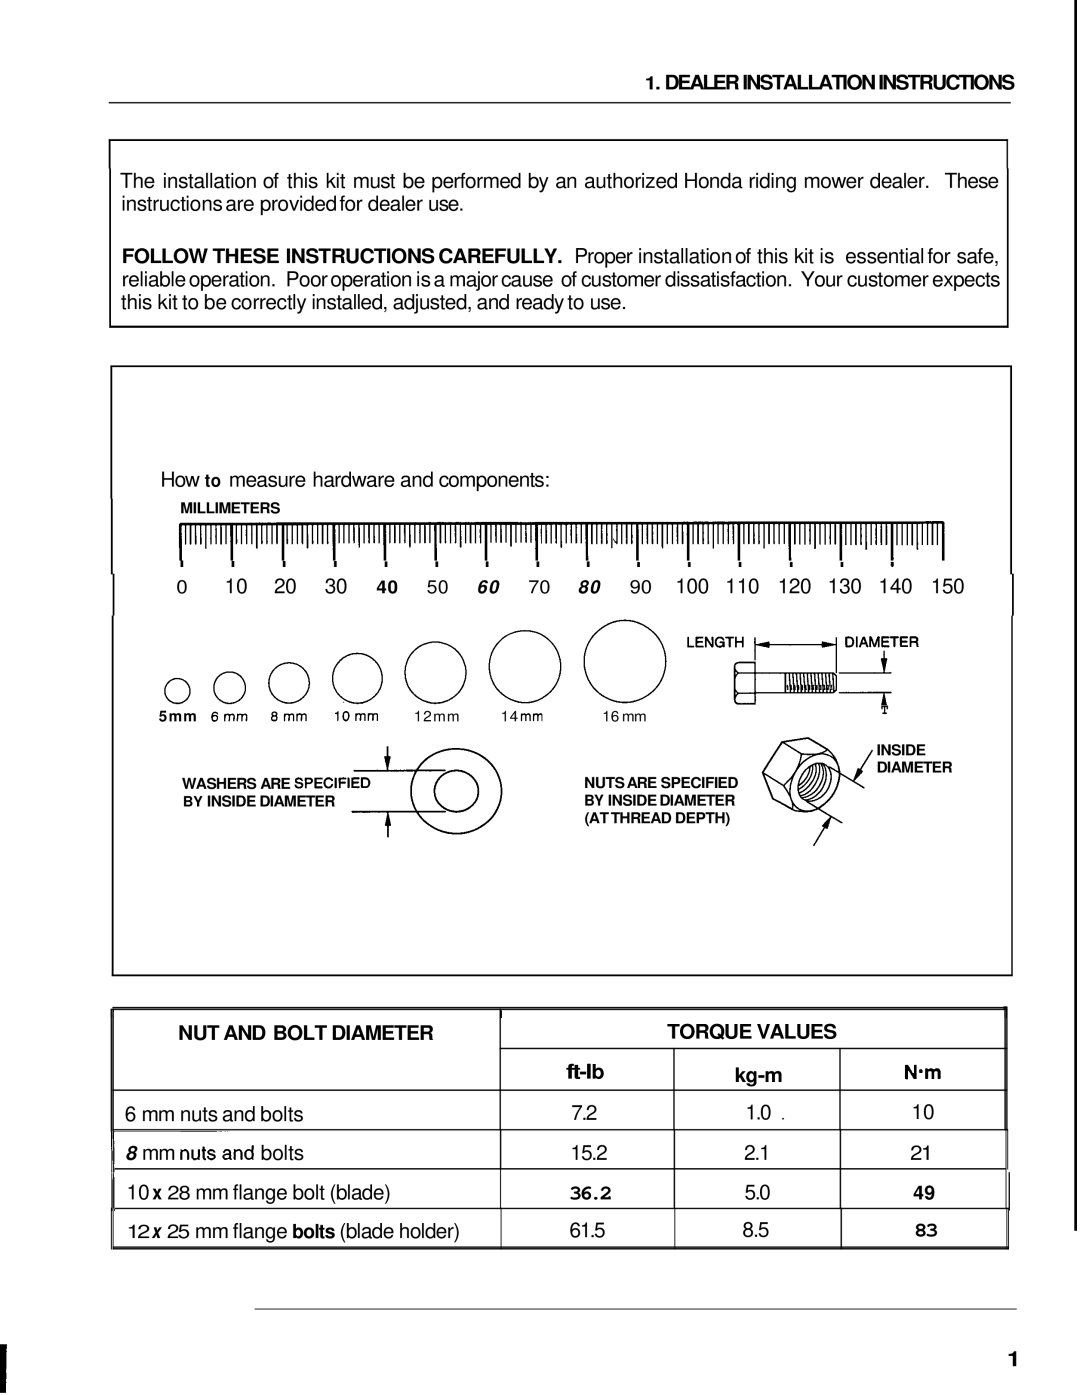 Honda Power Equipment H3000 Dealer Installation Instructions, Nut And Bolt Diameter, Torque Values, ft-lb, kg-m, 36.2 